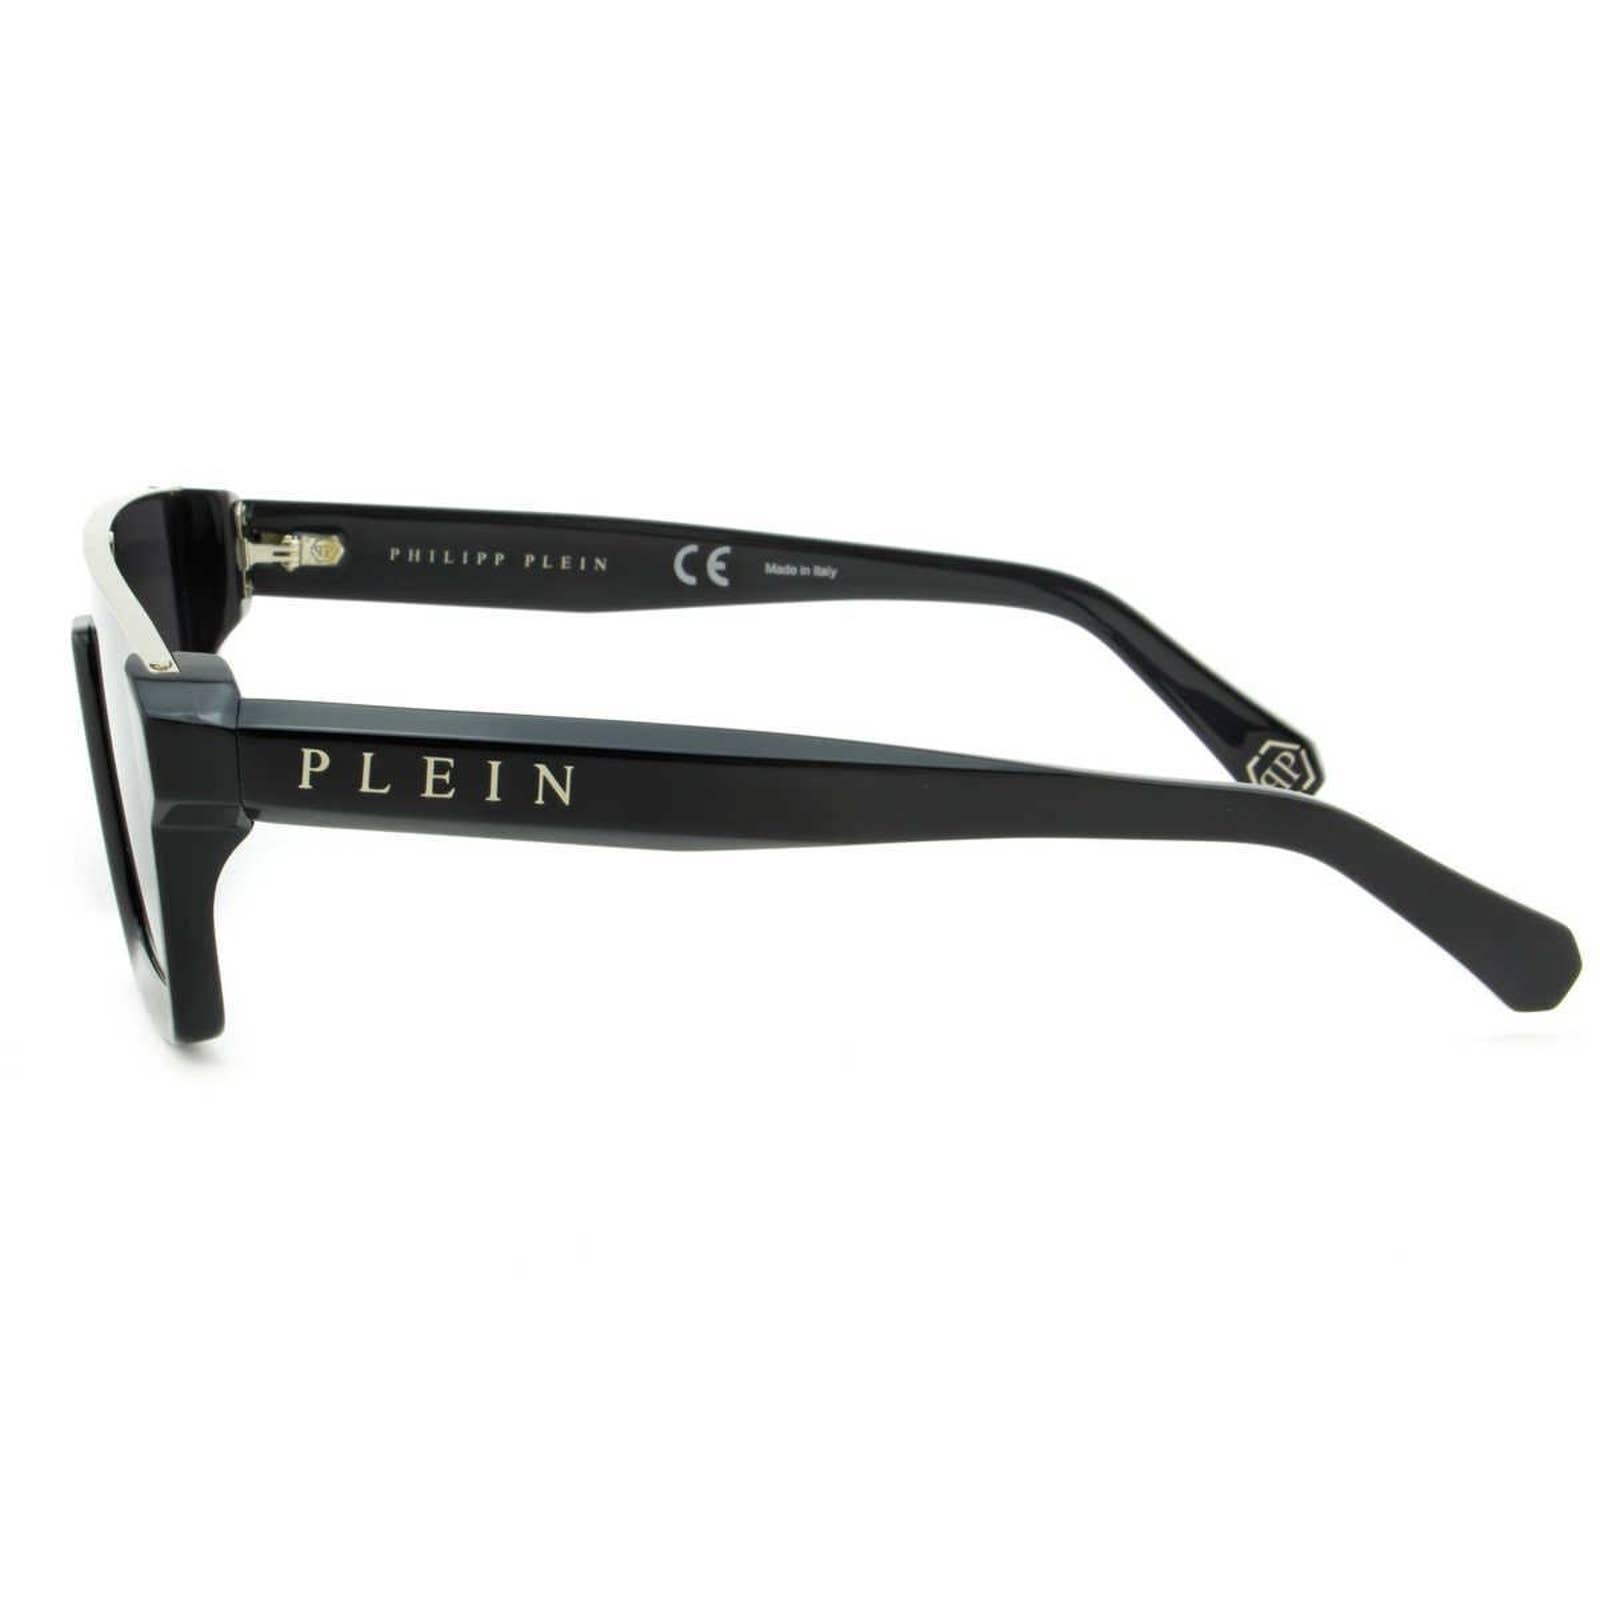 Men Black Square Shield Sunglasses SPP006M-0700